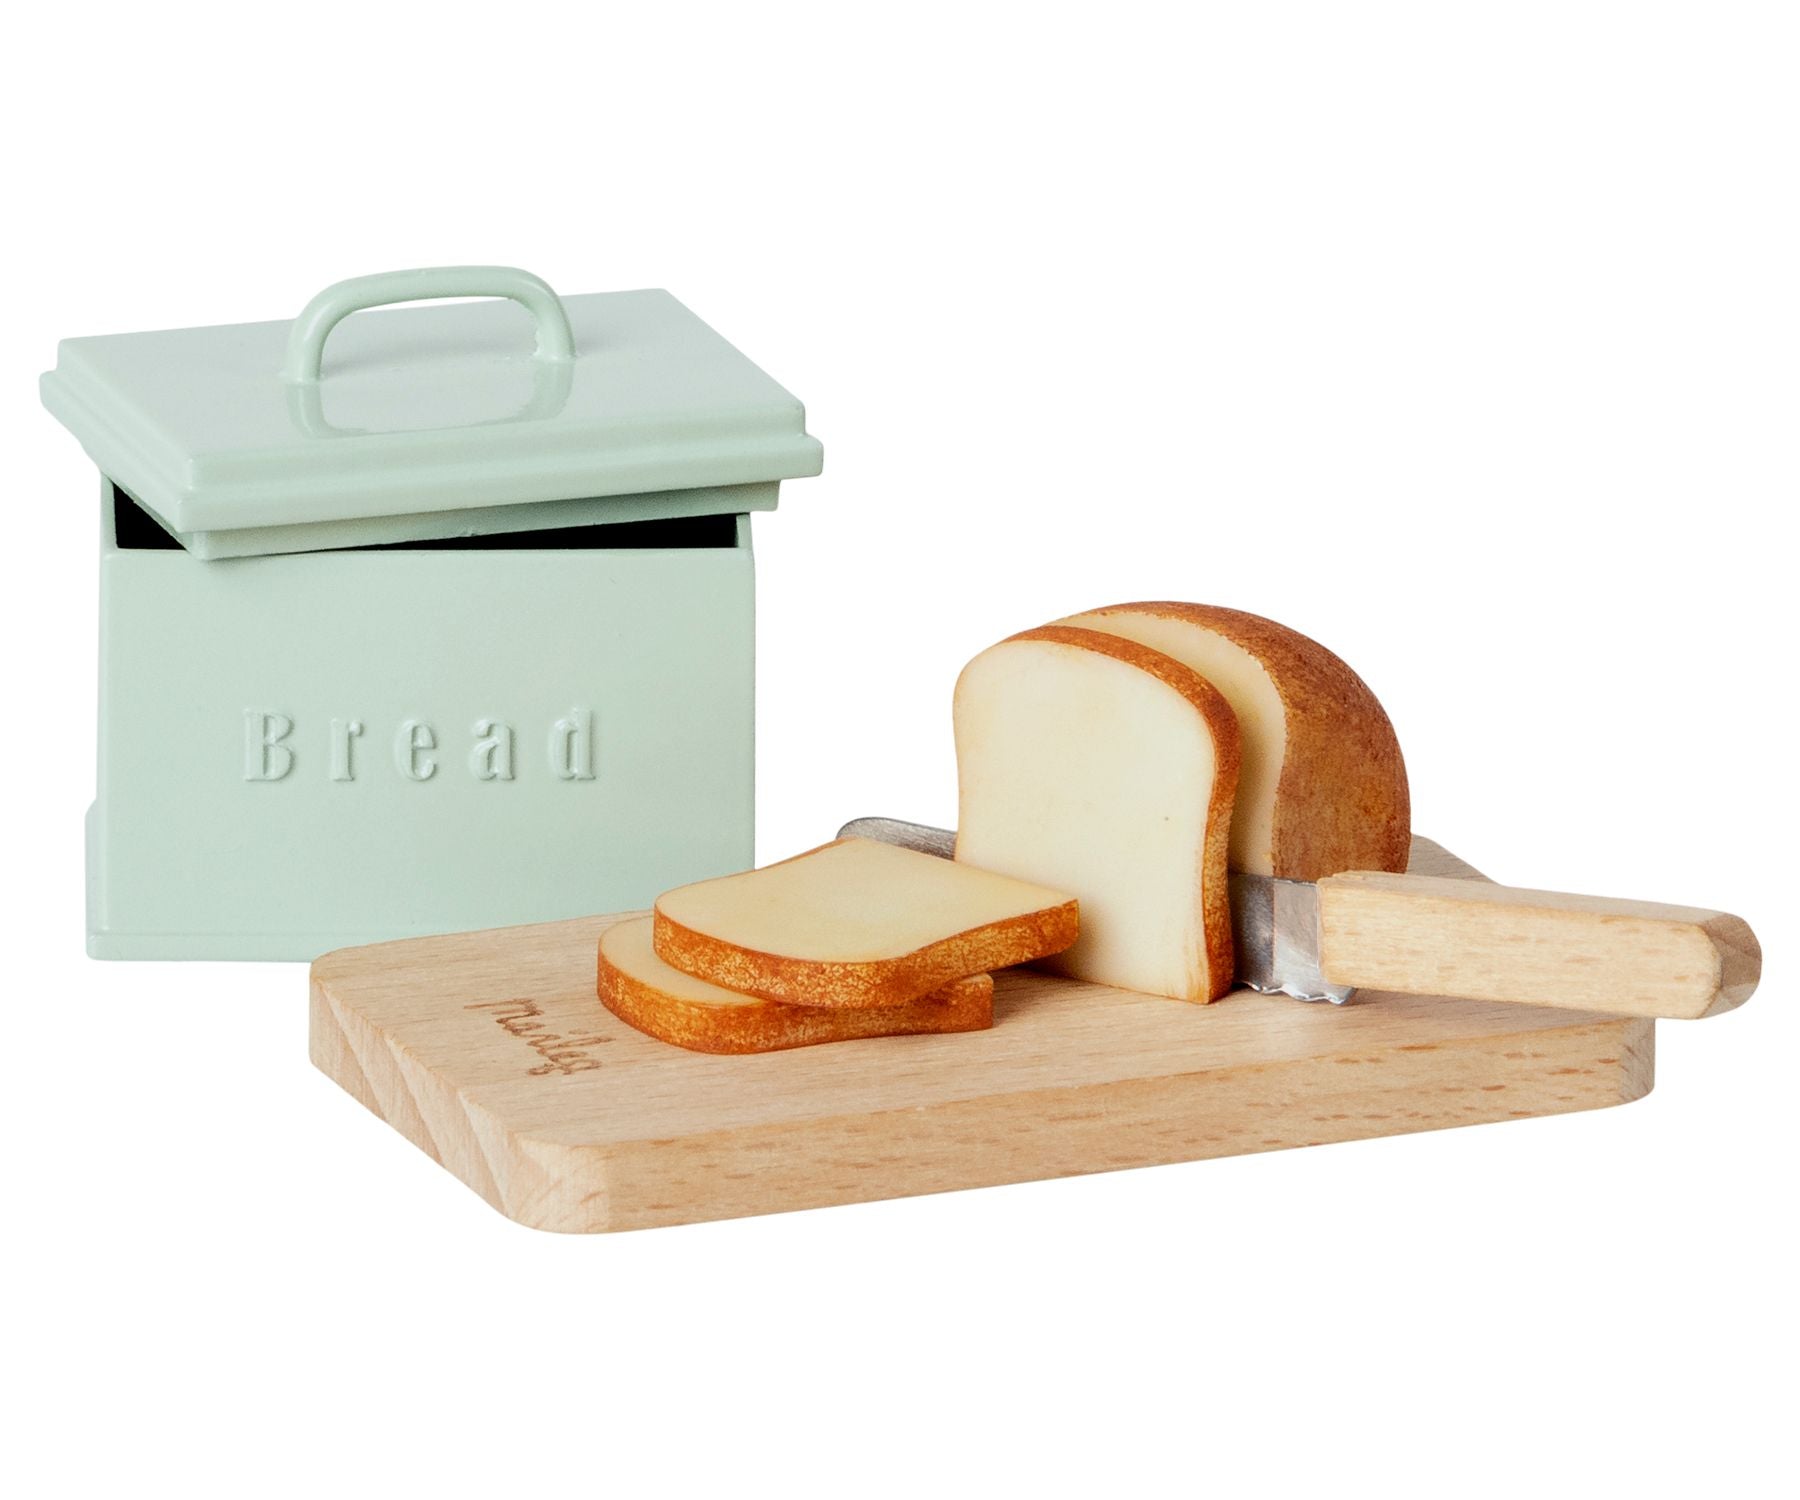 Brødboks  med brød, skærebrædt og brødkniv fra Maileg.